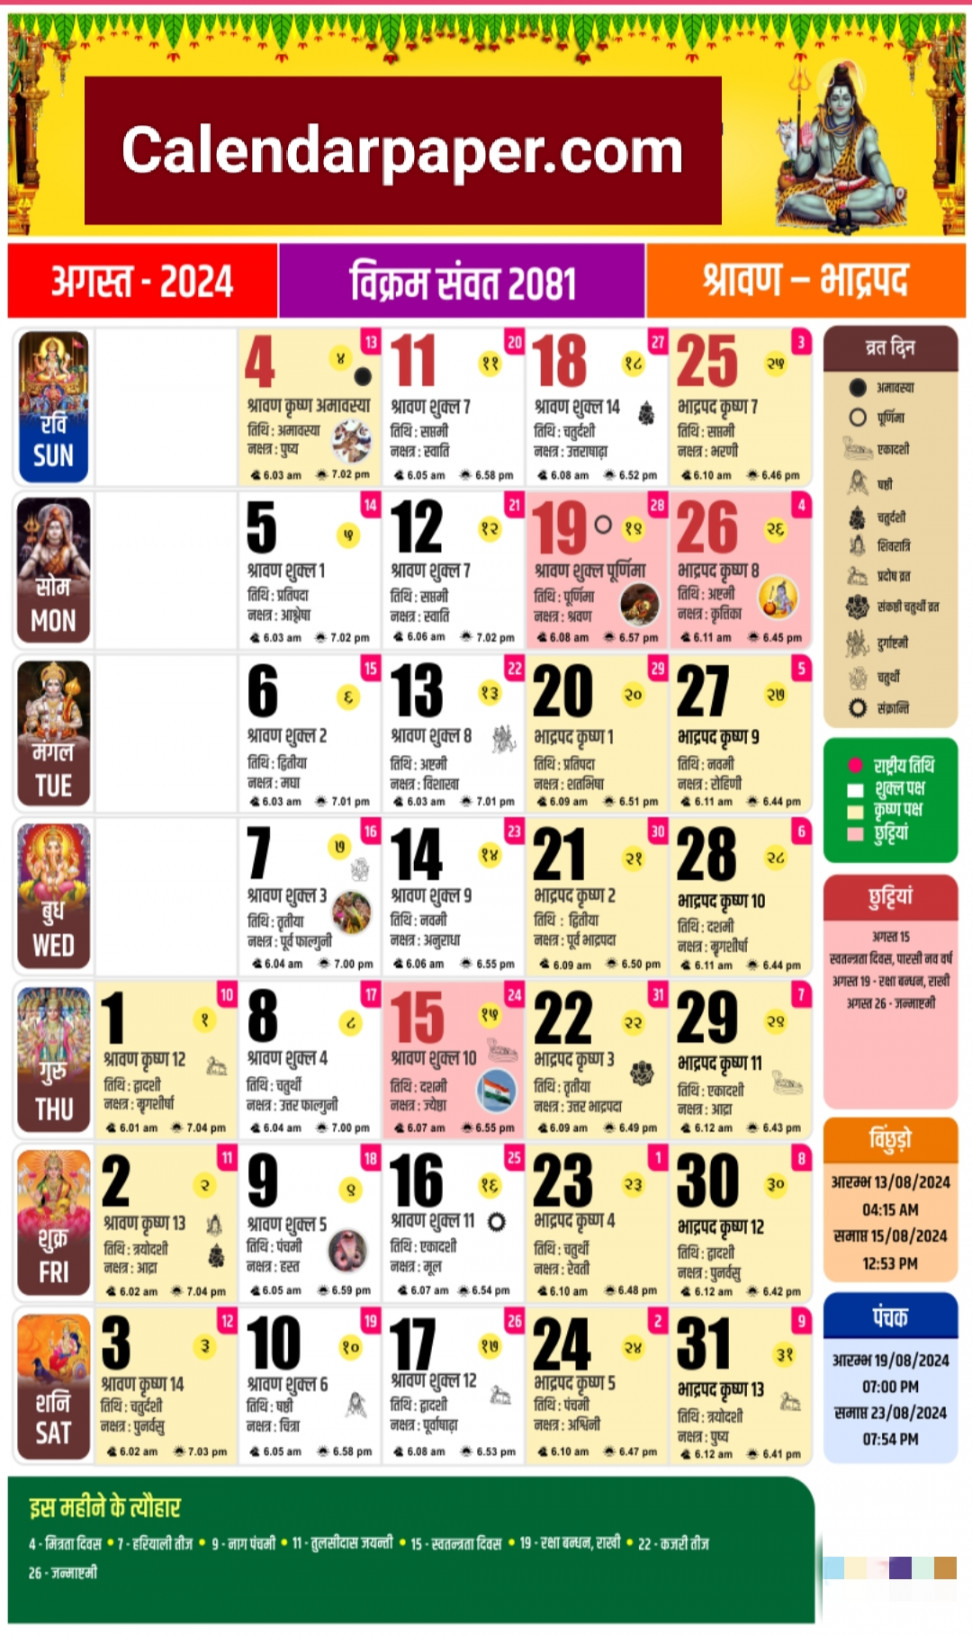 August  Hindu calendar (Vikram Samanta) list of all festivals